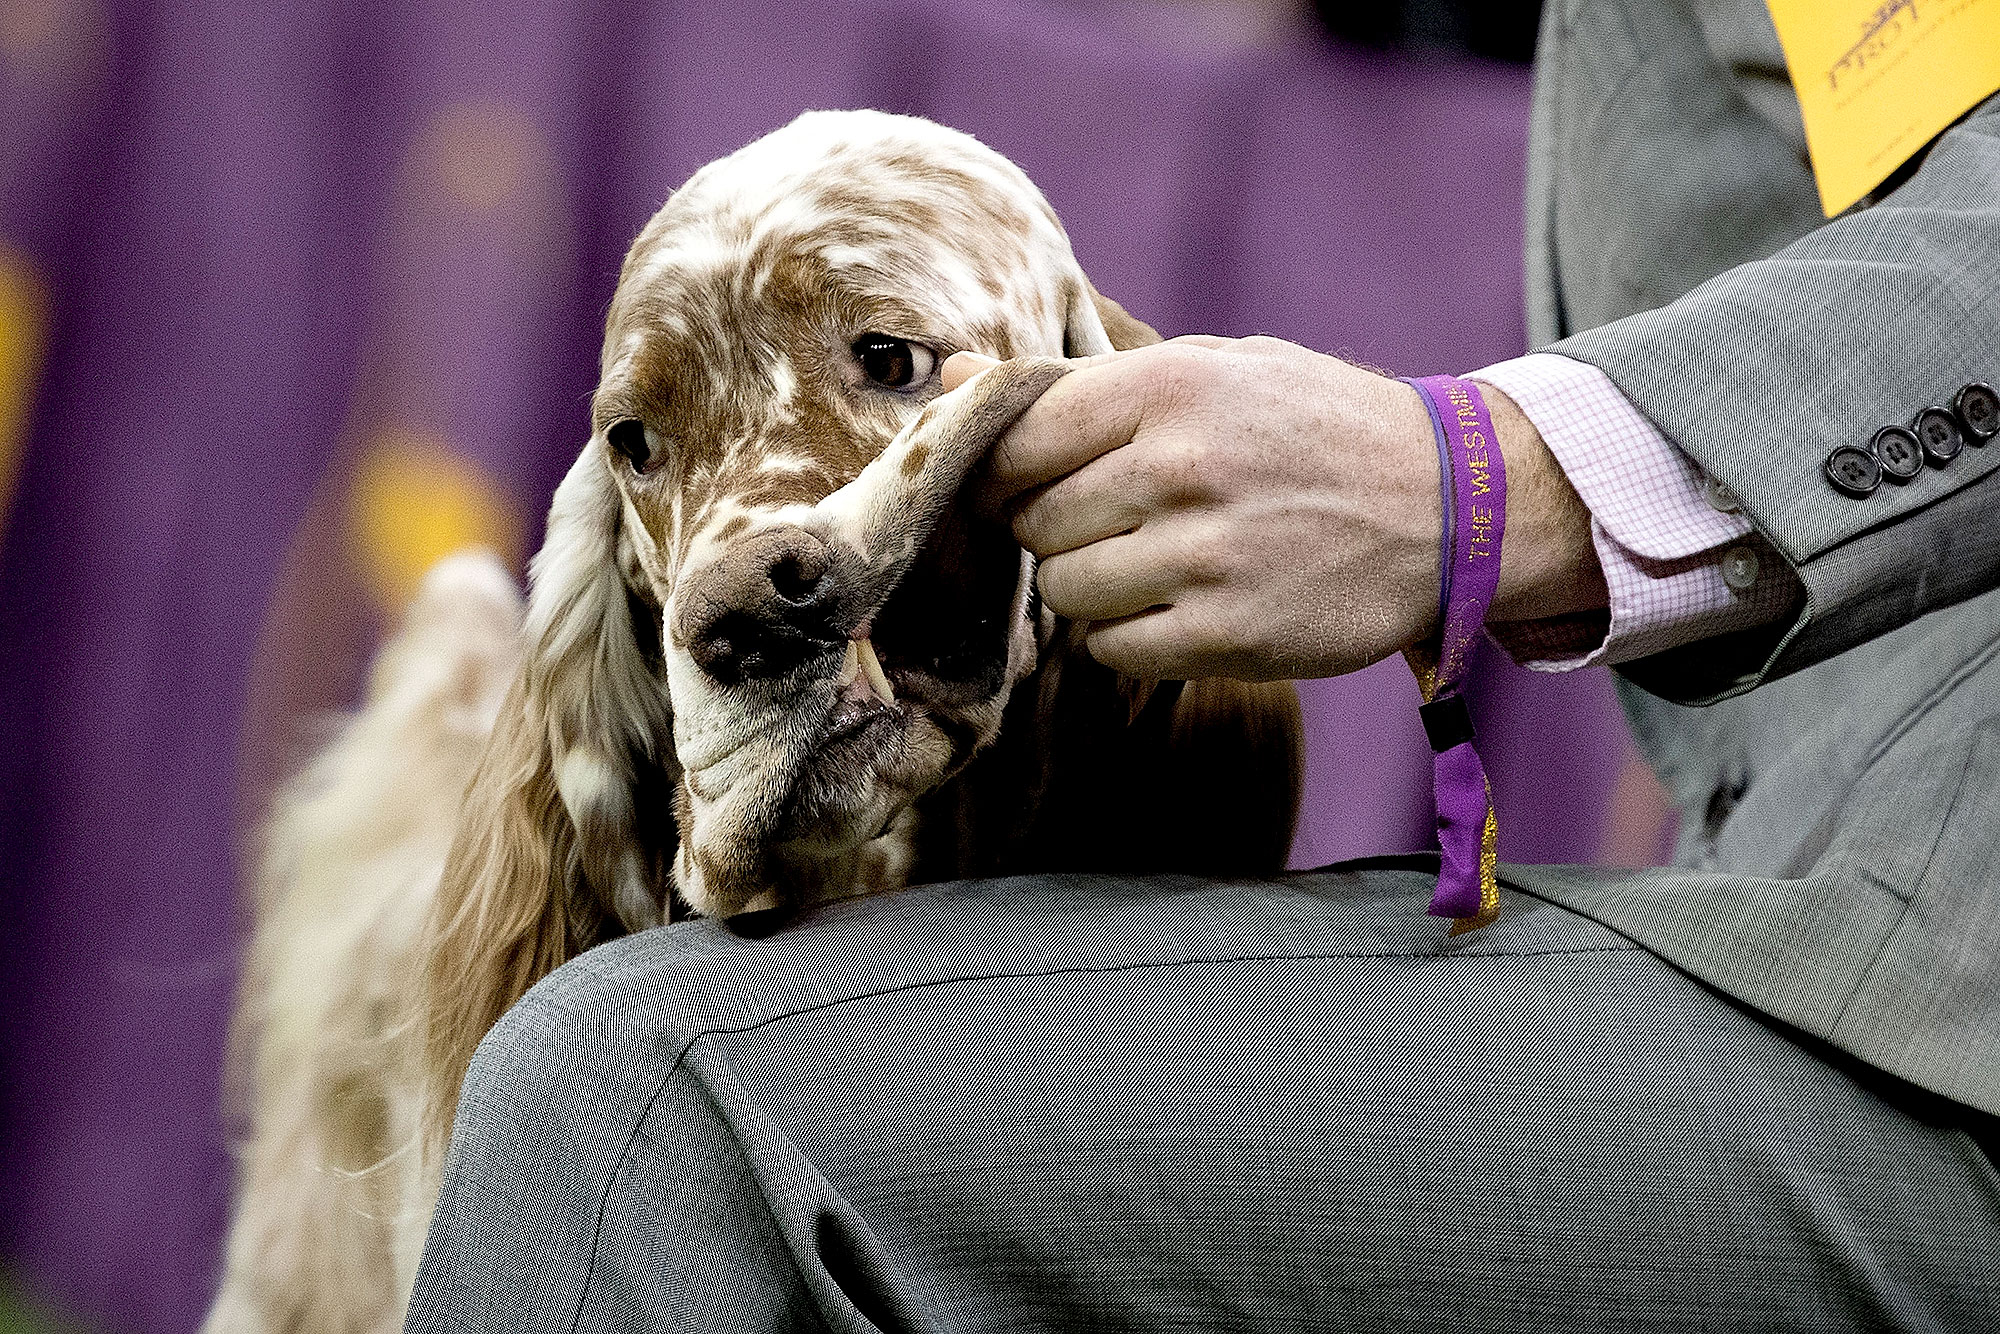 Westminster Dog Show Awards 'Best in Show' to Rumor the German Shepherd